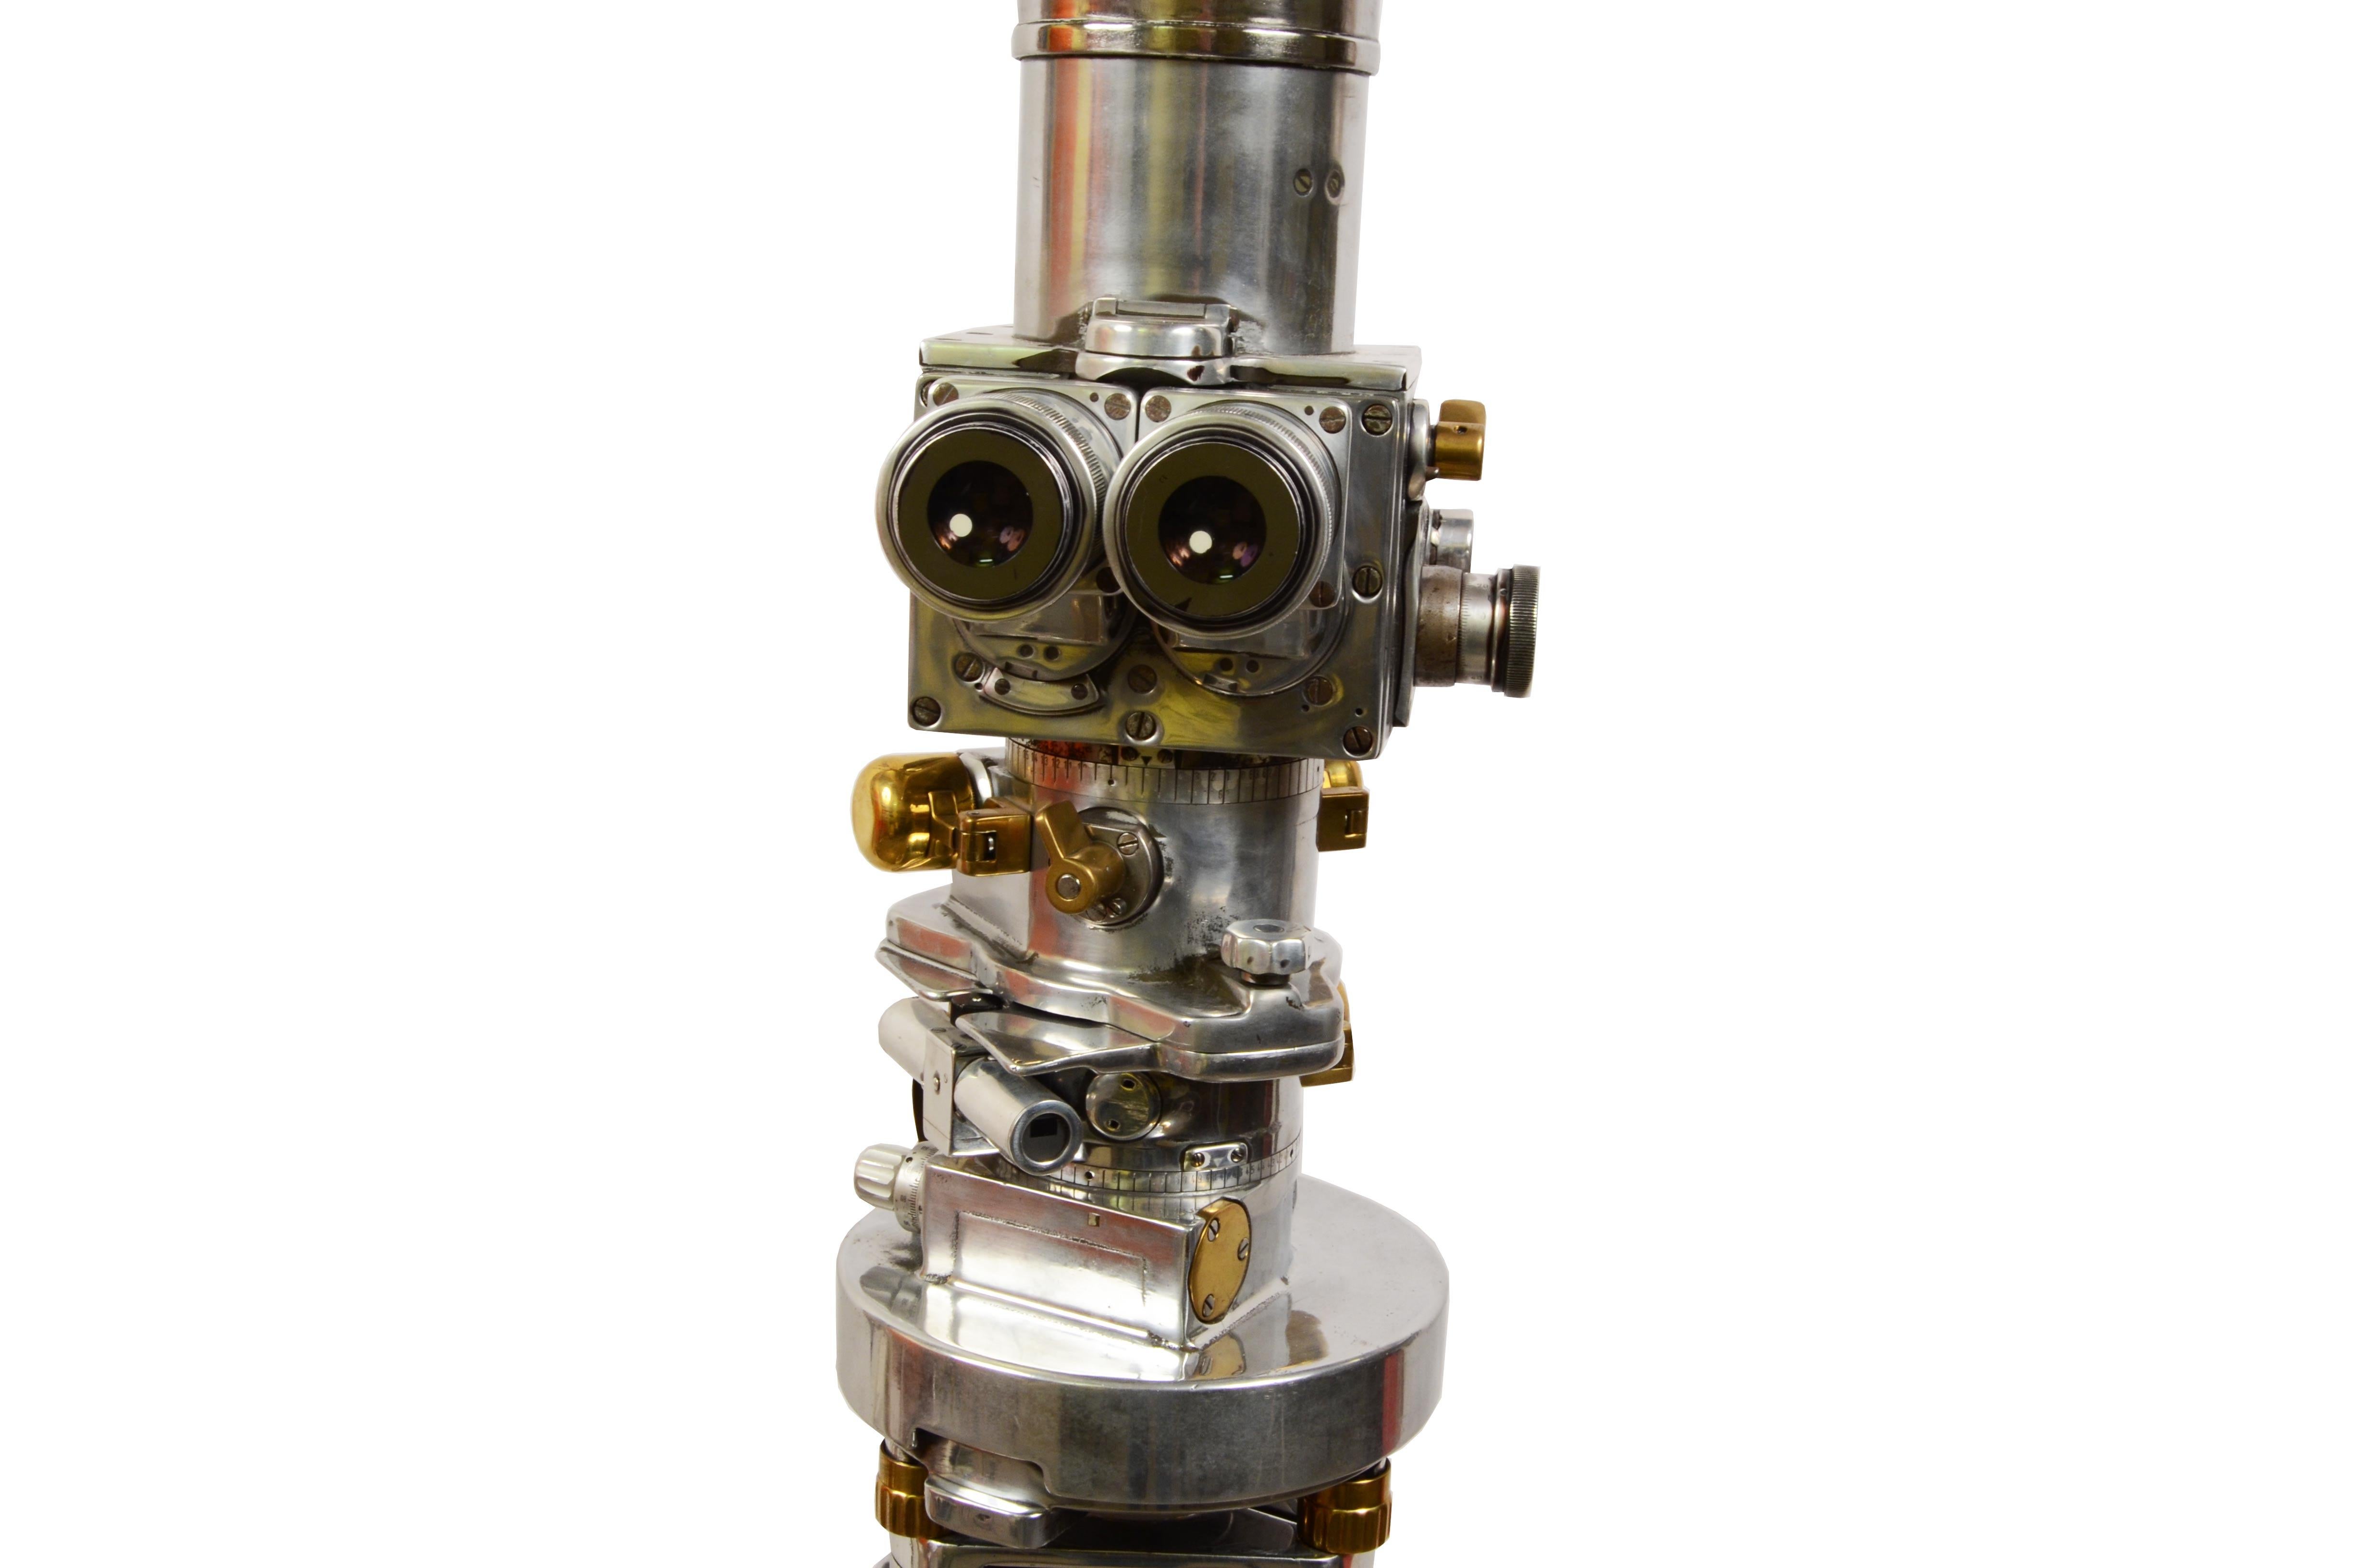 Aluminum 1950s Carl Zeiss Antique Binocular Periscope Surveyor Scientific Instrument